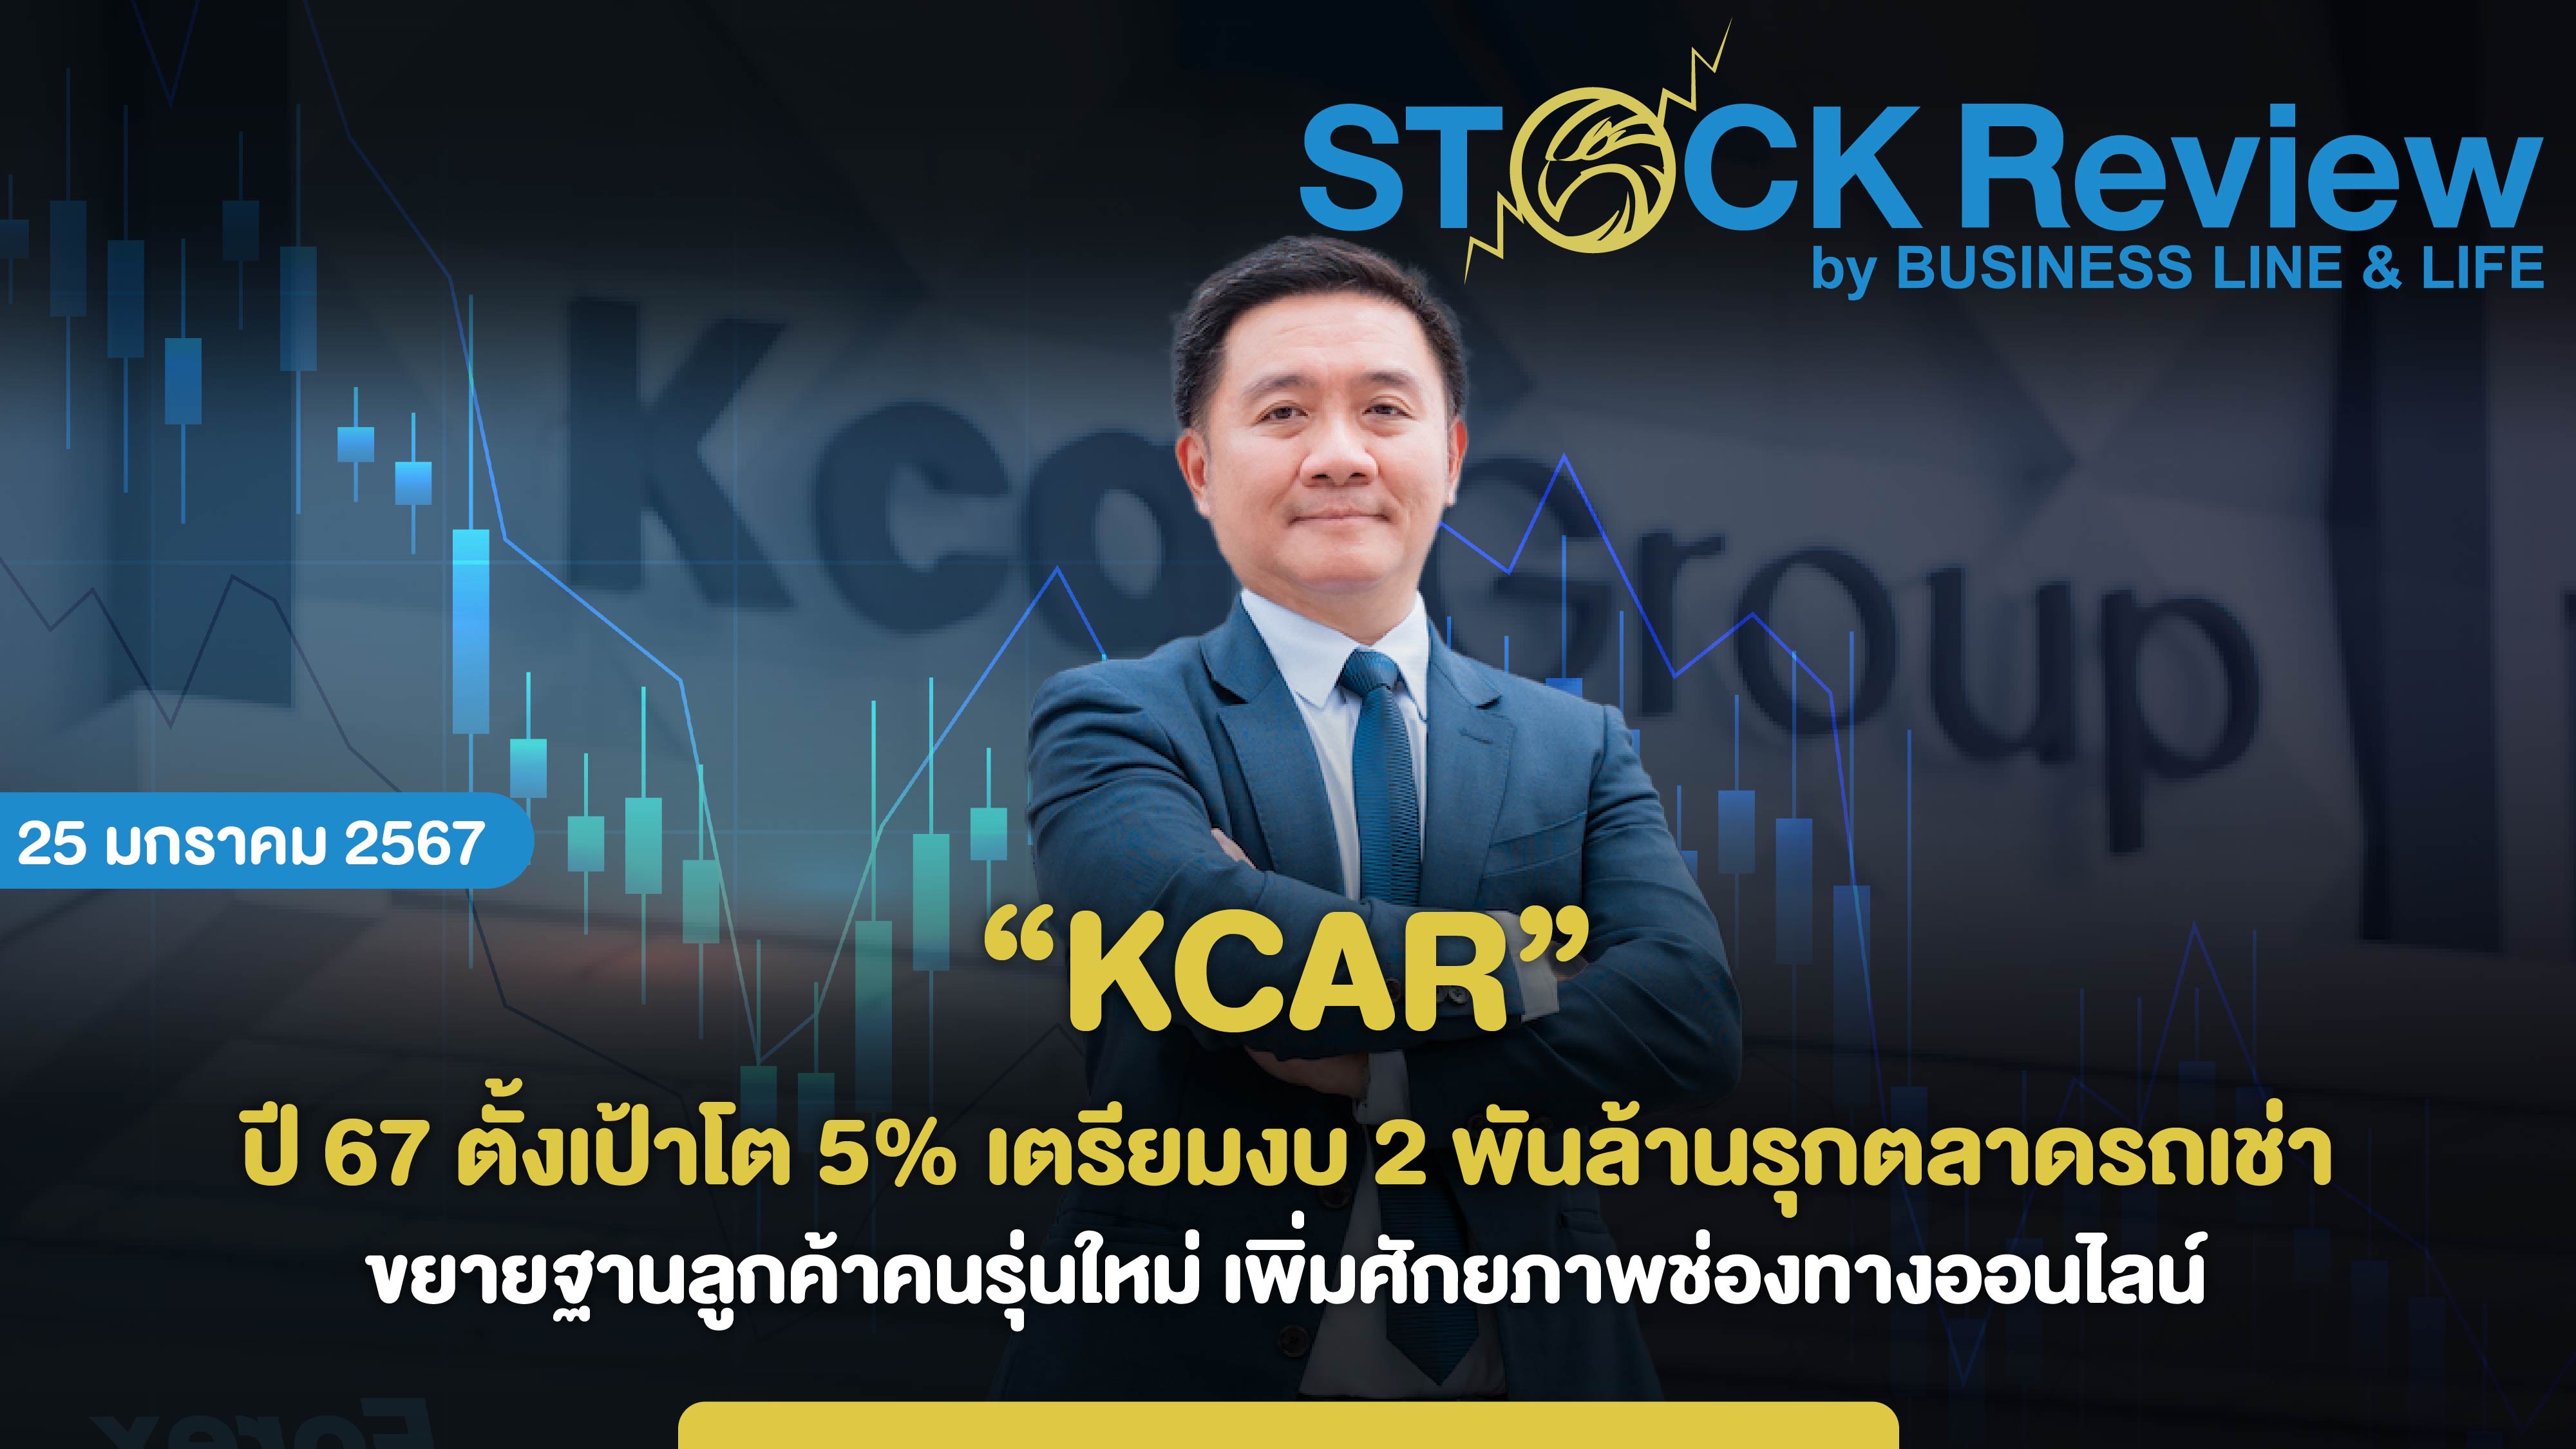 “KCAR” ปี 67 ตั้งเป้าโต 5% รุกตลาดรถเช่า